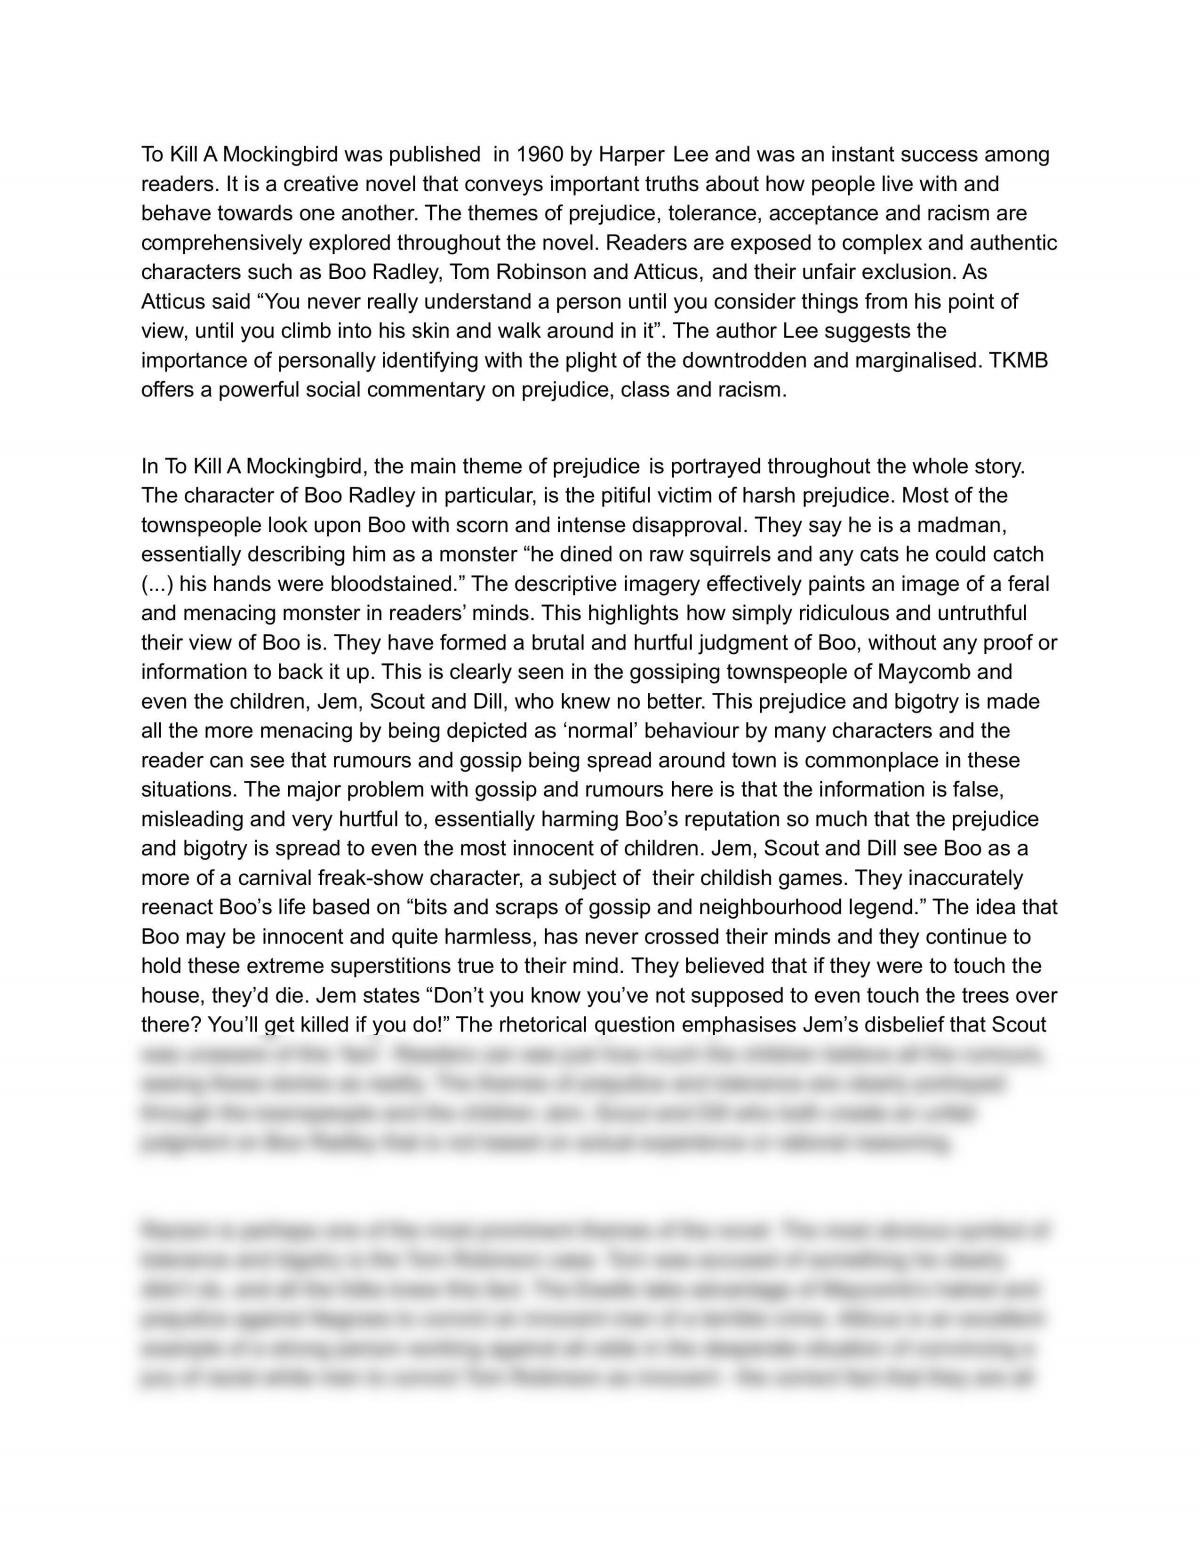 Essay: To Kill A Mockingbird - Page 1